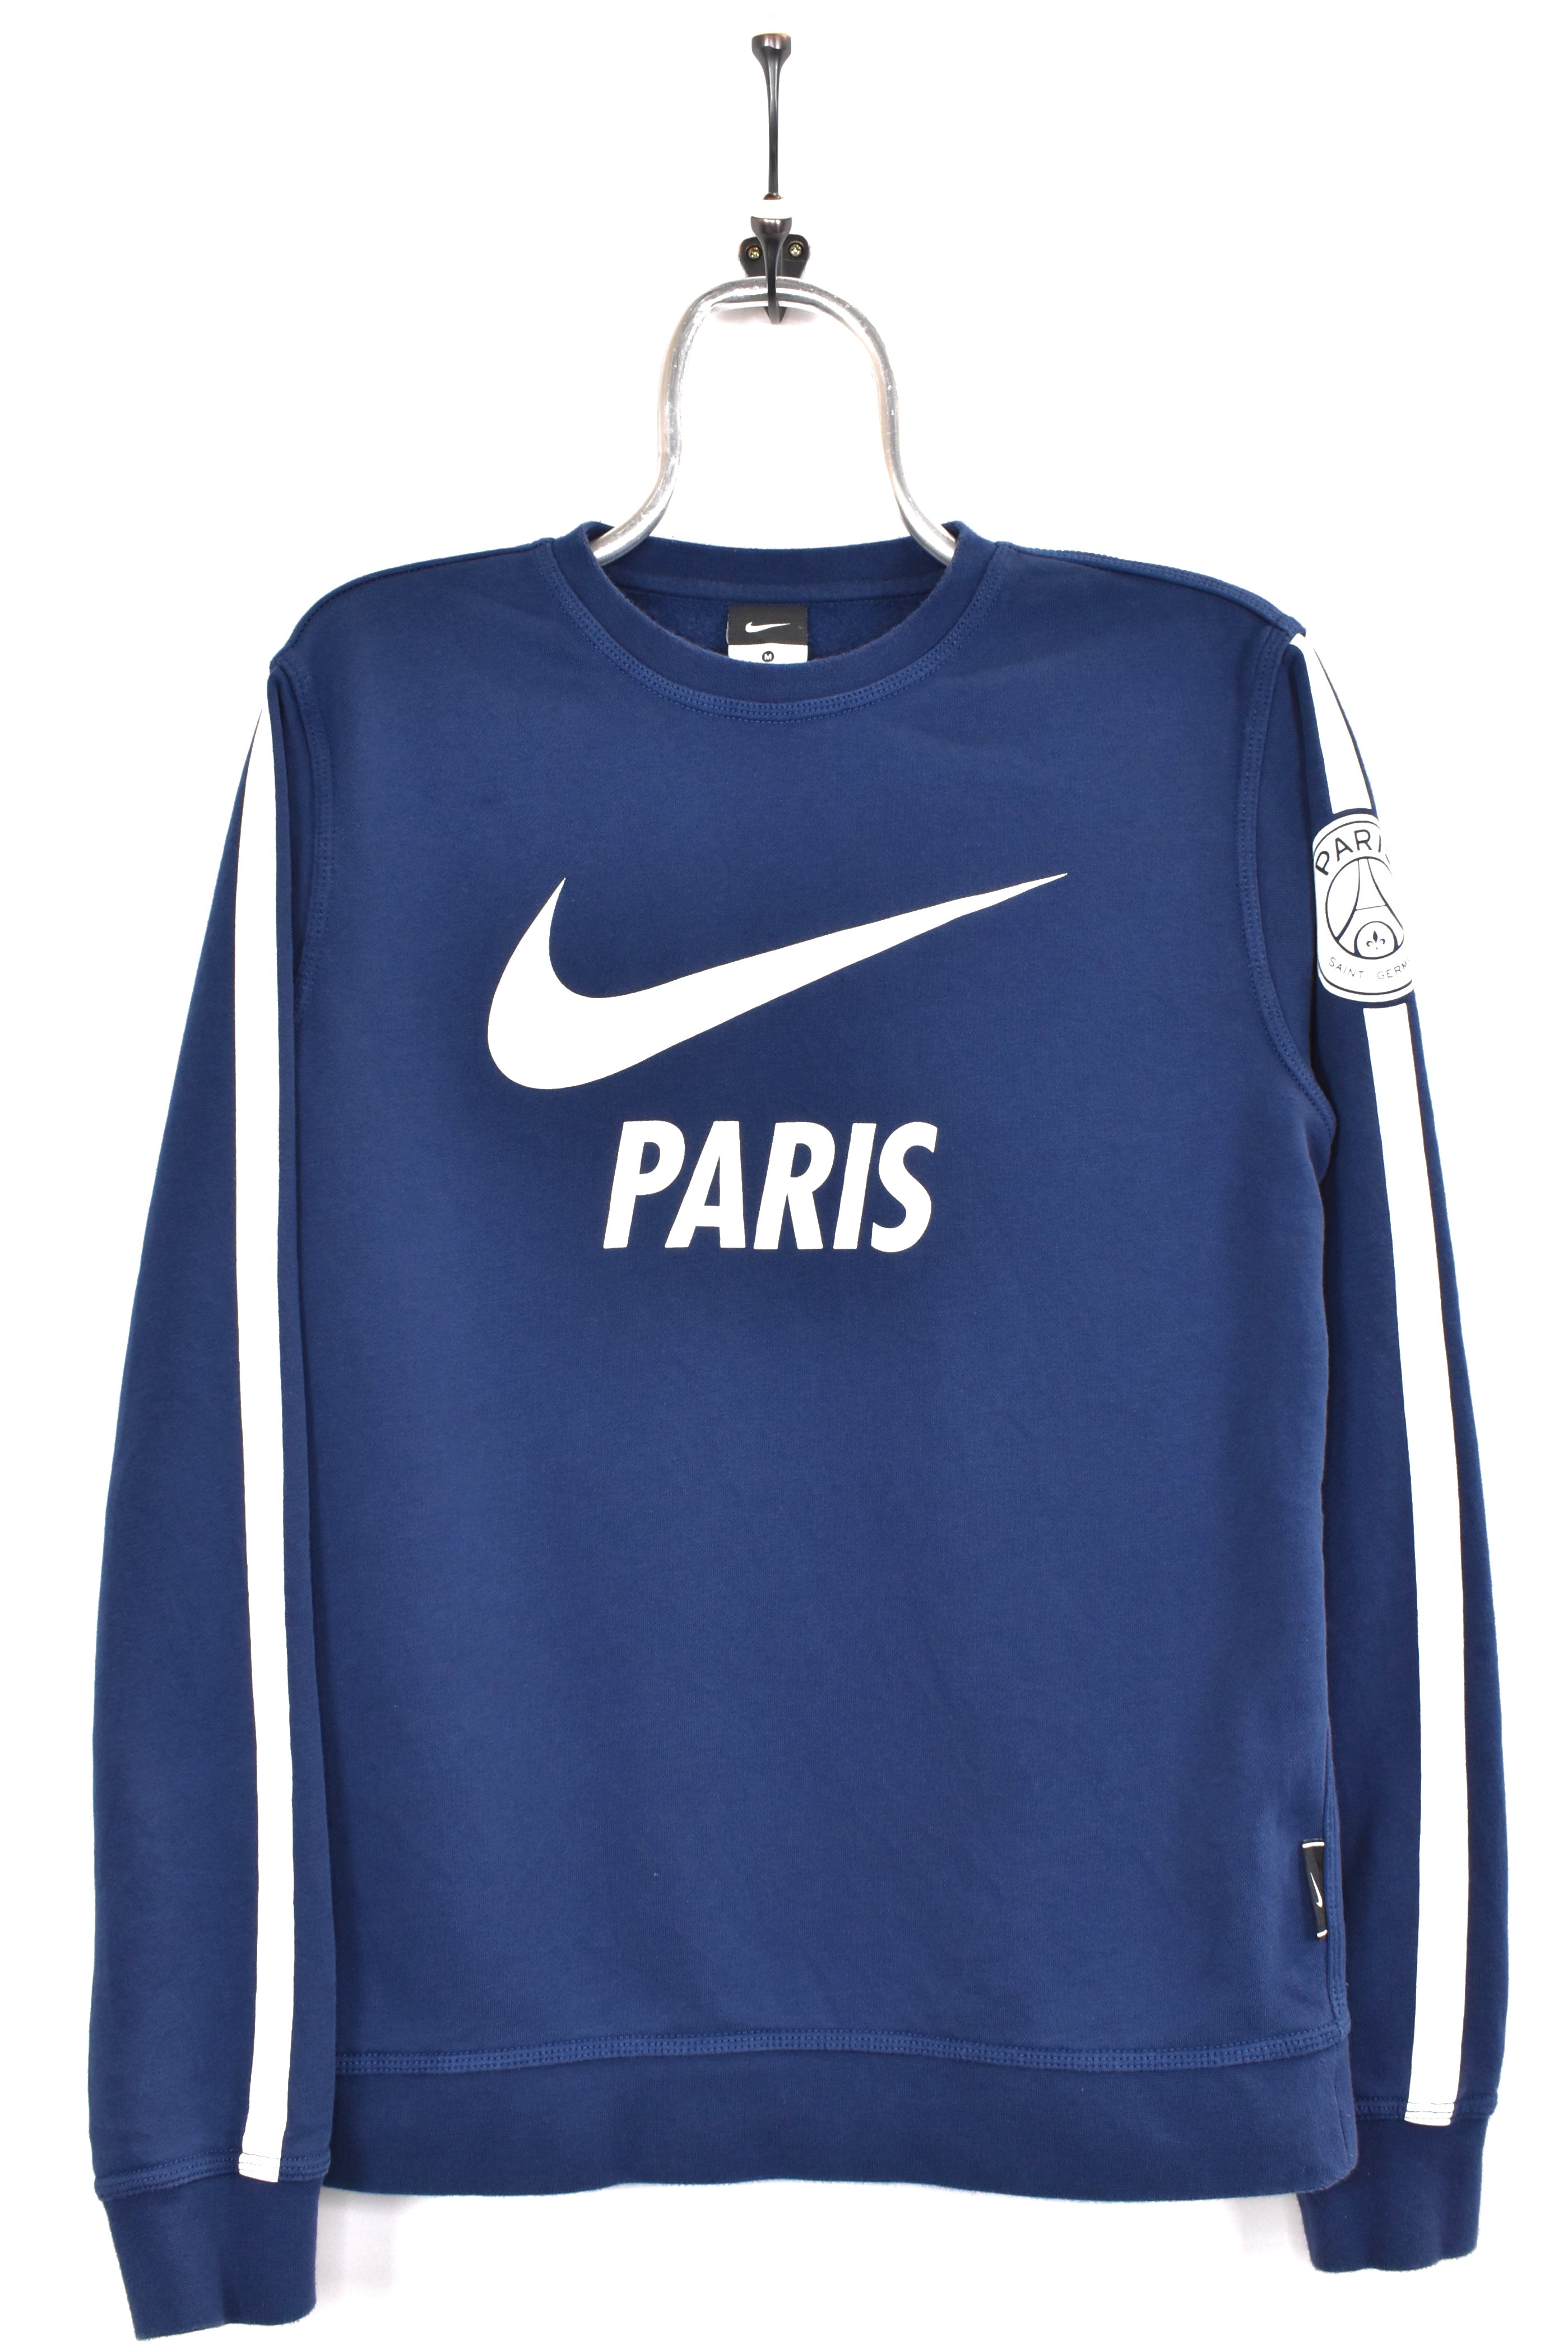 Vintage Nike sweatshirt, blue Paris graphic crewneck - AU Medium NIKE